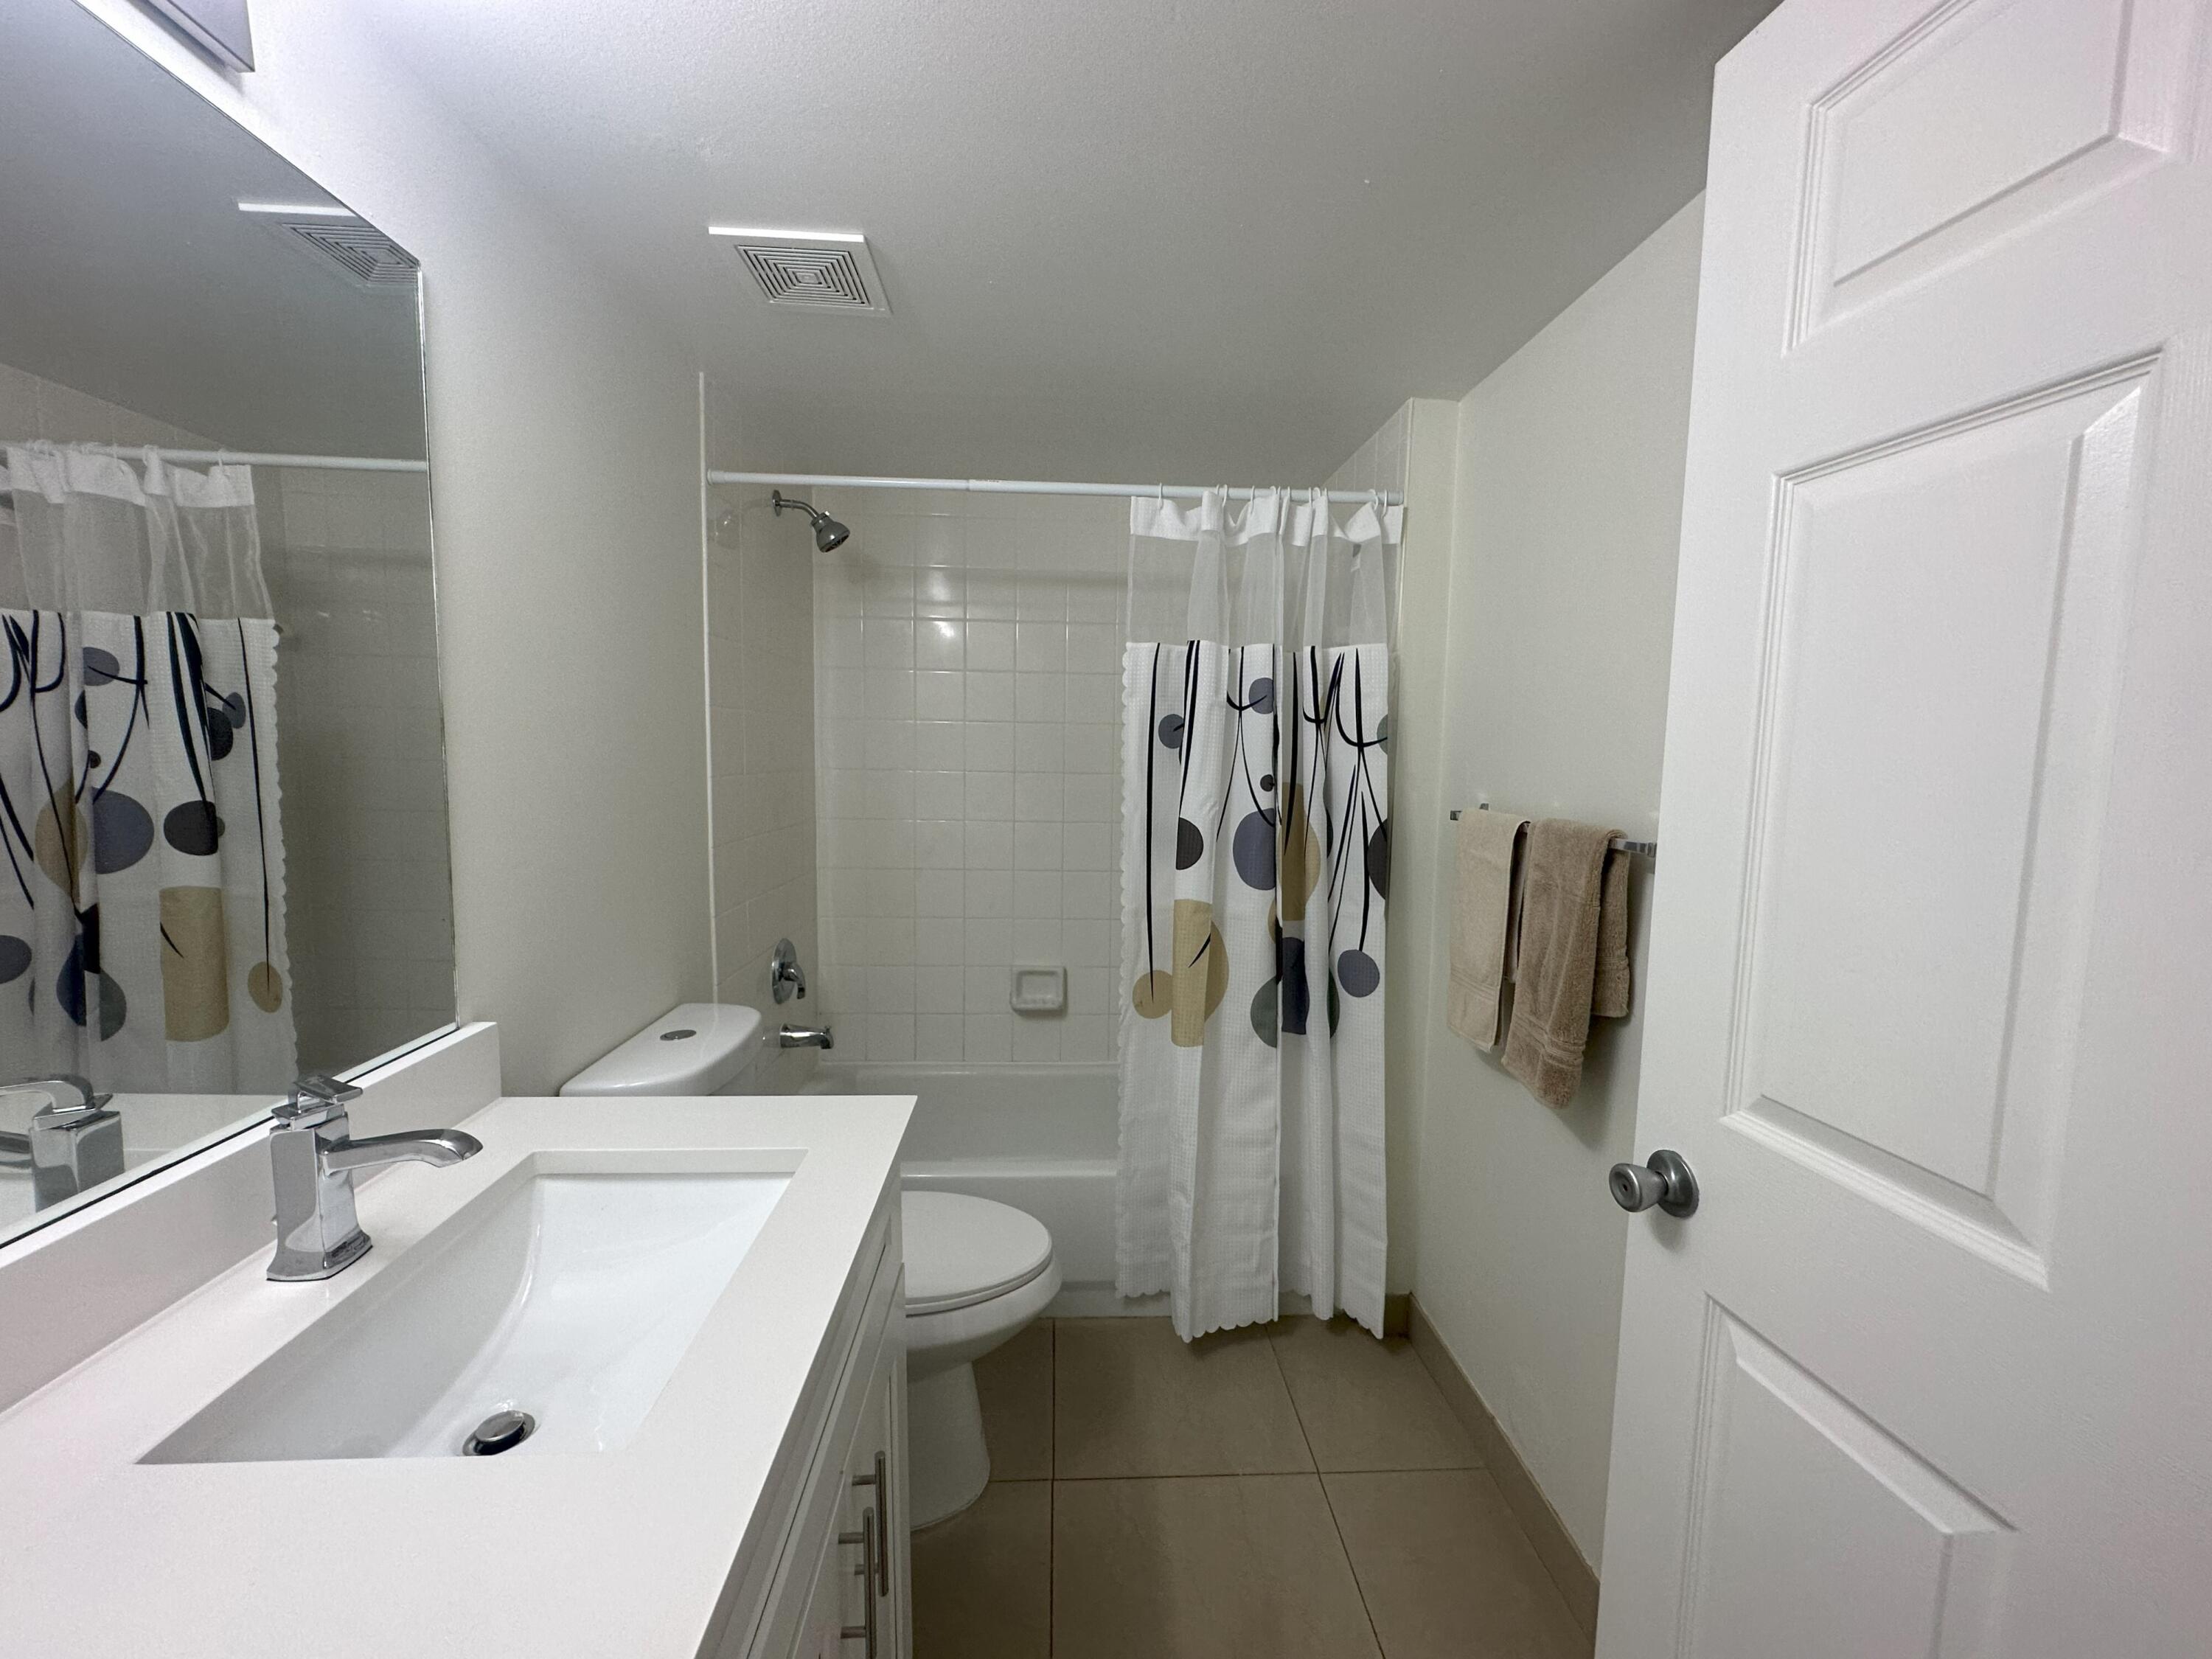 Guest Bathroom - new vanity and toilet